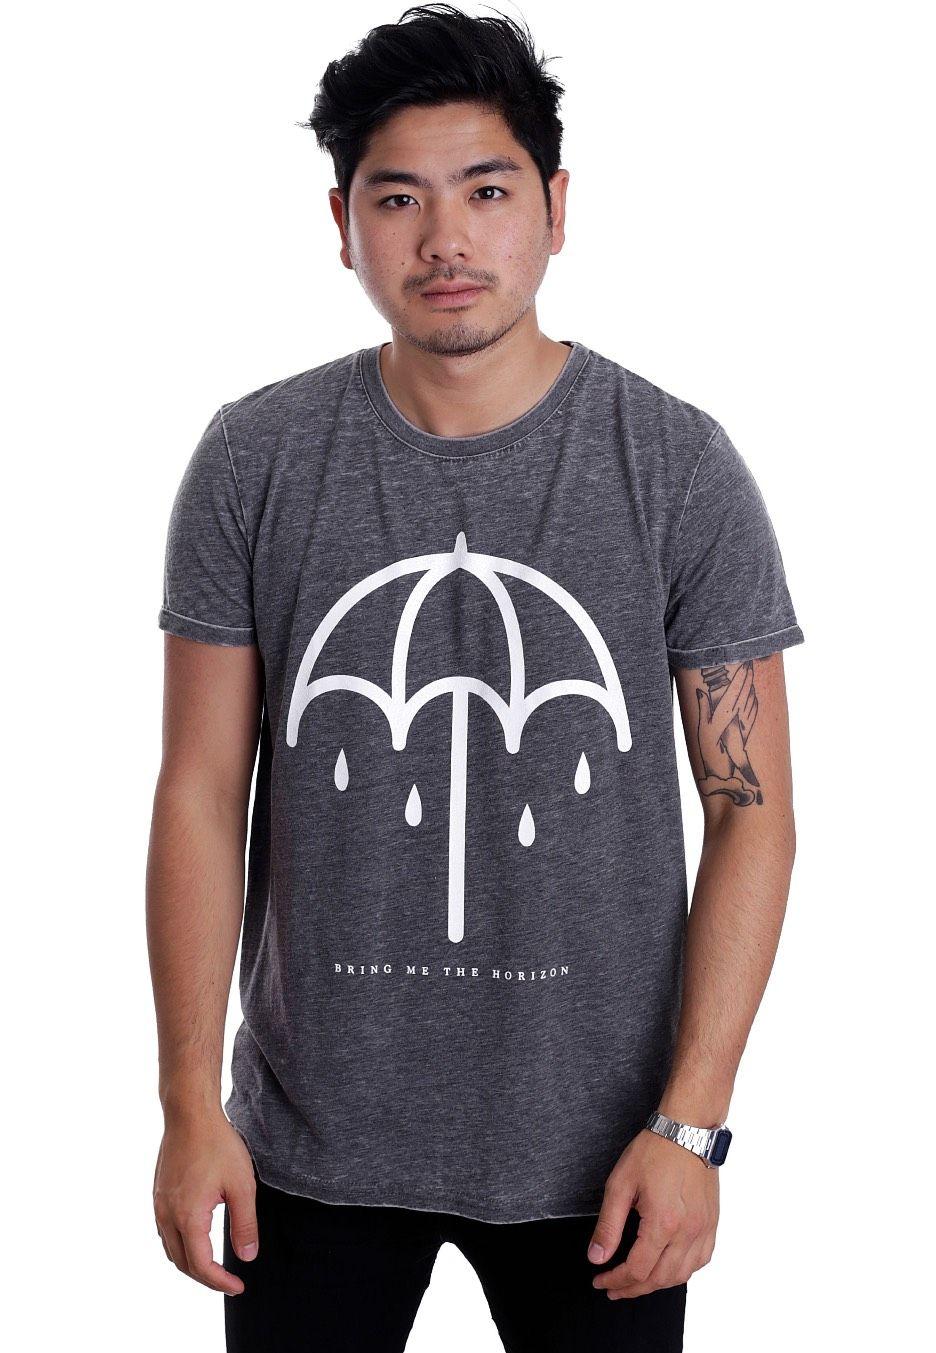 Bring Me the Horizon Umbrella Logo - Bring Me The Horizon - Umbrella Burnout Grey - T-Shirt - Impericon ...